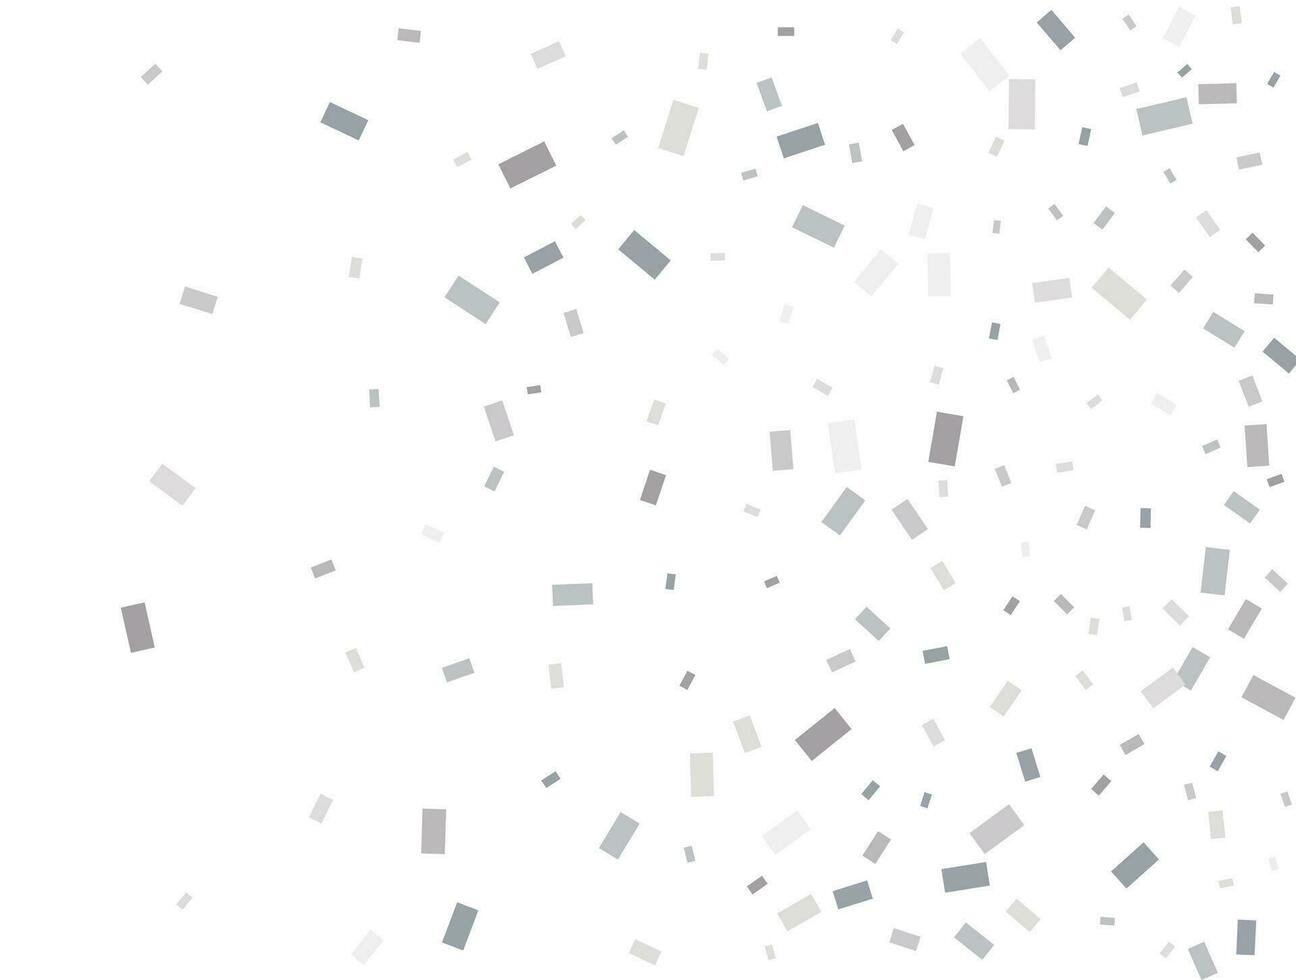 licht zilver rechthoekig schitteren confetti achtergrond. wit feestelijk textuur. vector